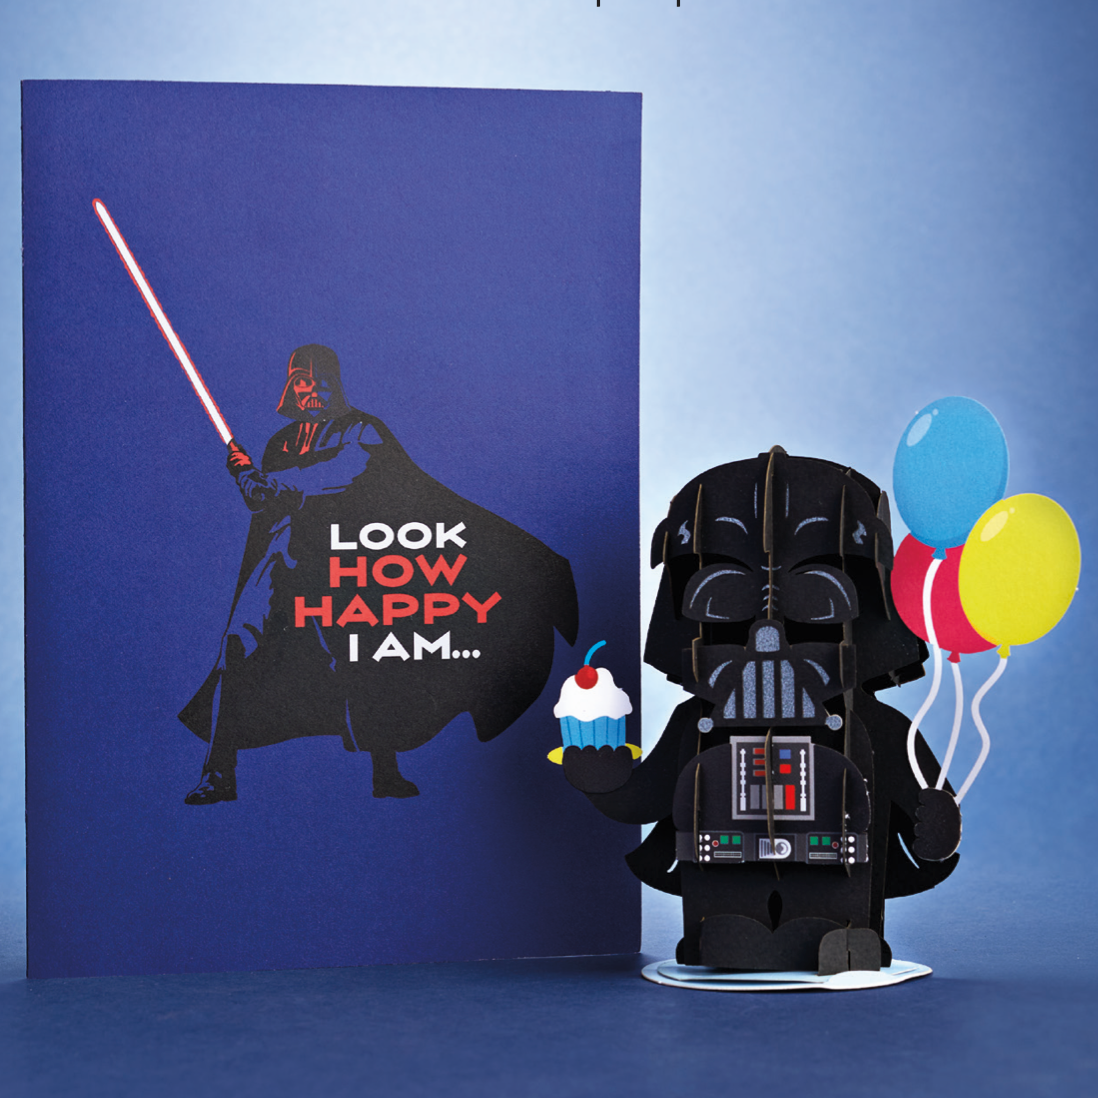 Star Wars™ Darth Vader™ Birthday Card with Pop-Up Gift